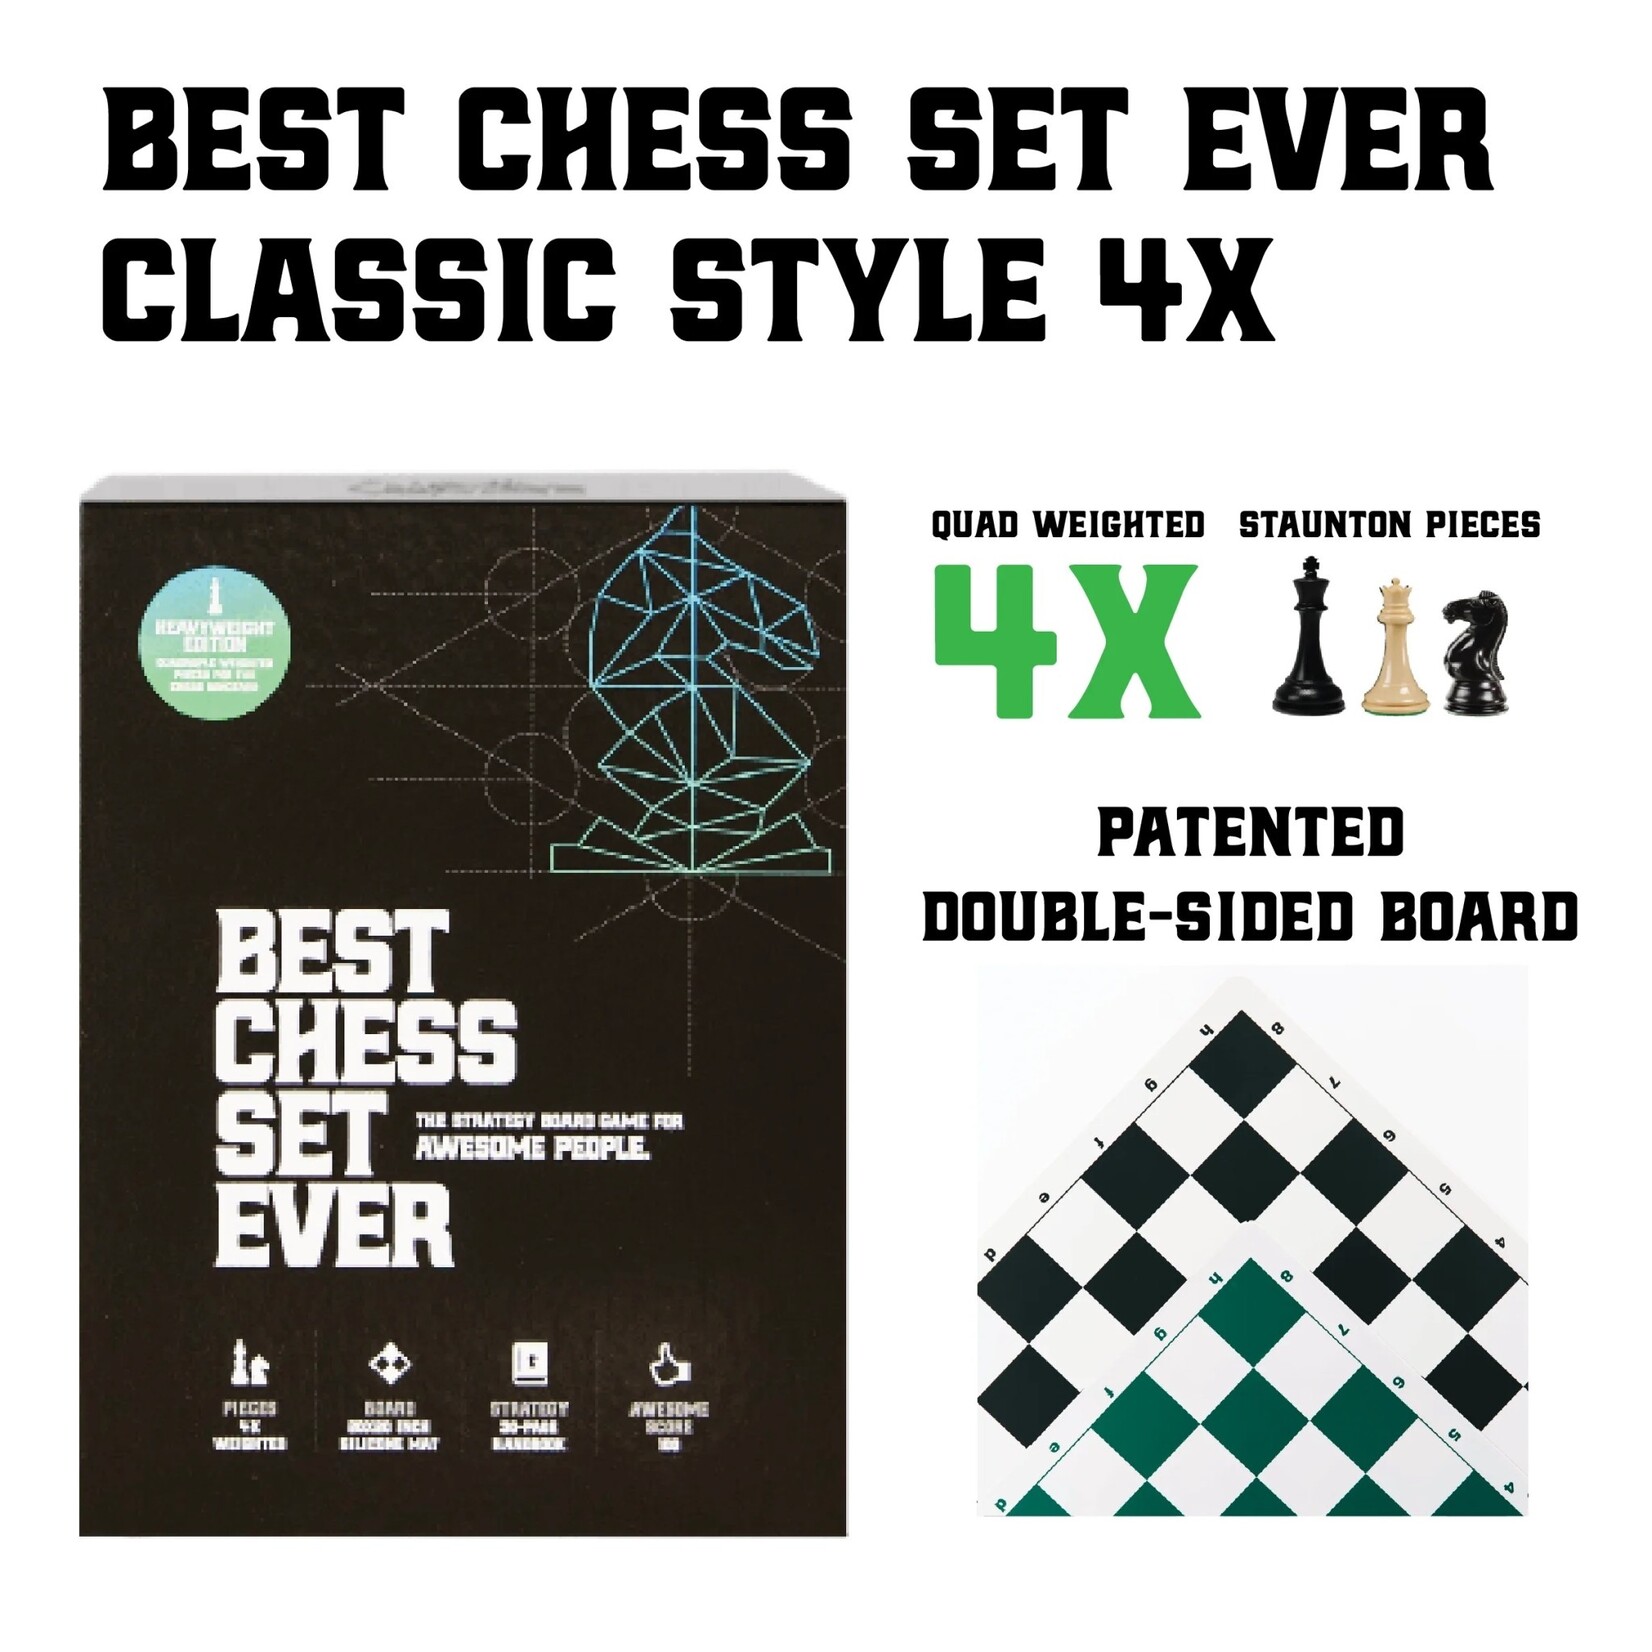 Best Chess Set Ever Best Chess Set Ever XL 4x Classic